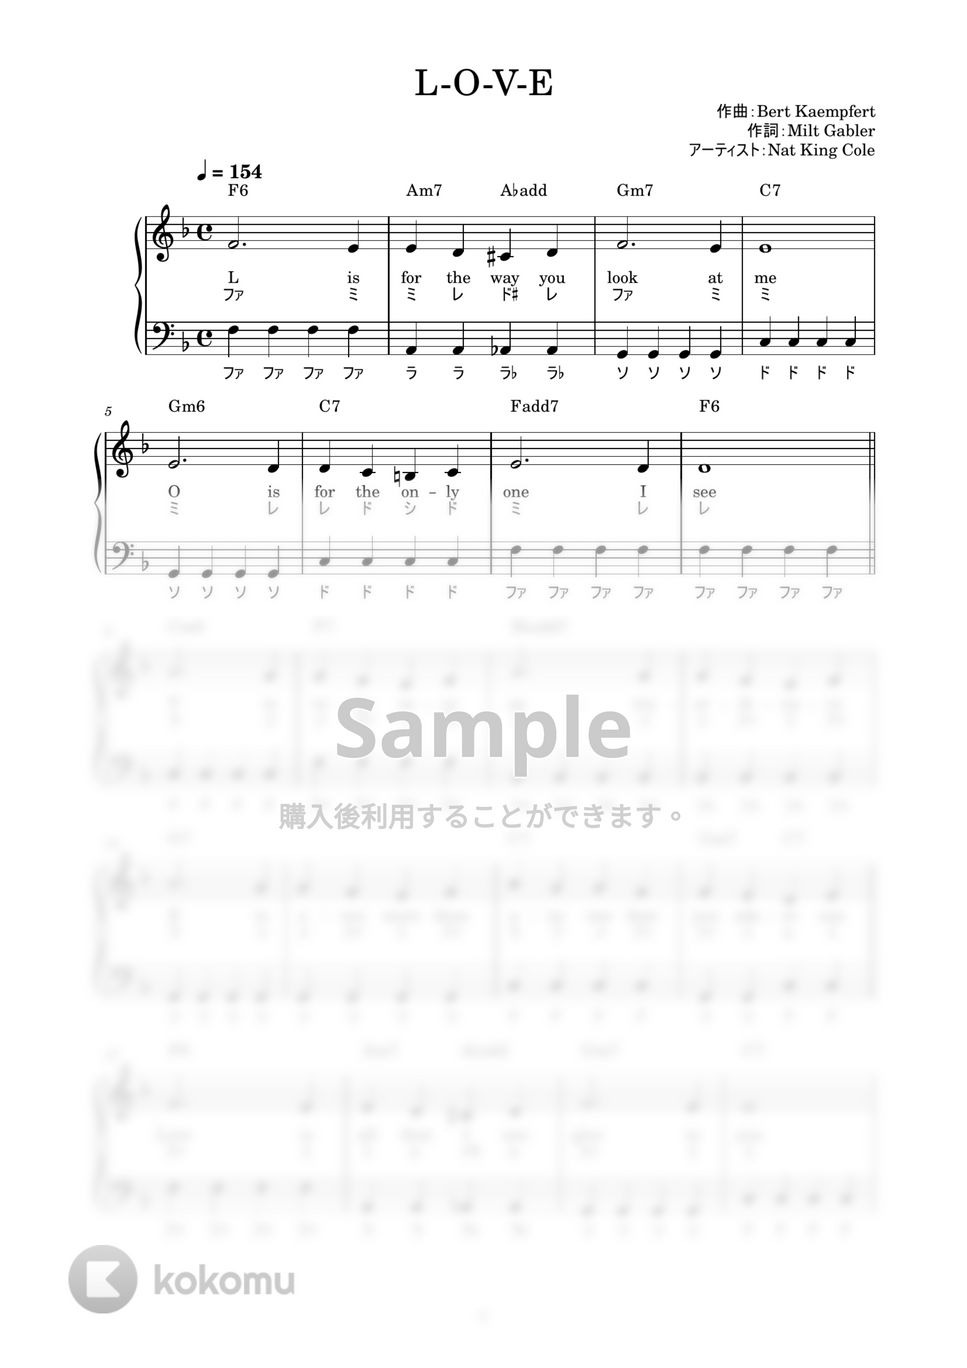 Nat King Cole - L-O-V-E (かんたん / 歌詞付き / ドレミ付き / 初心者) by piano.tokyo